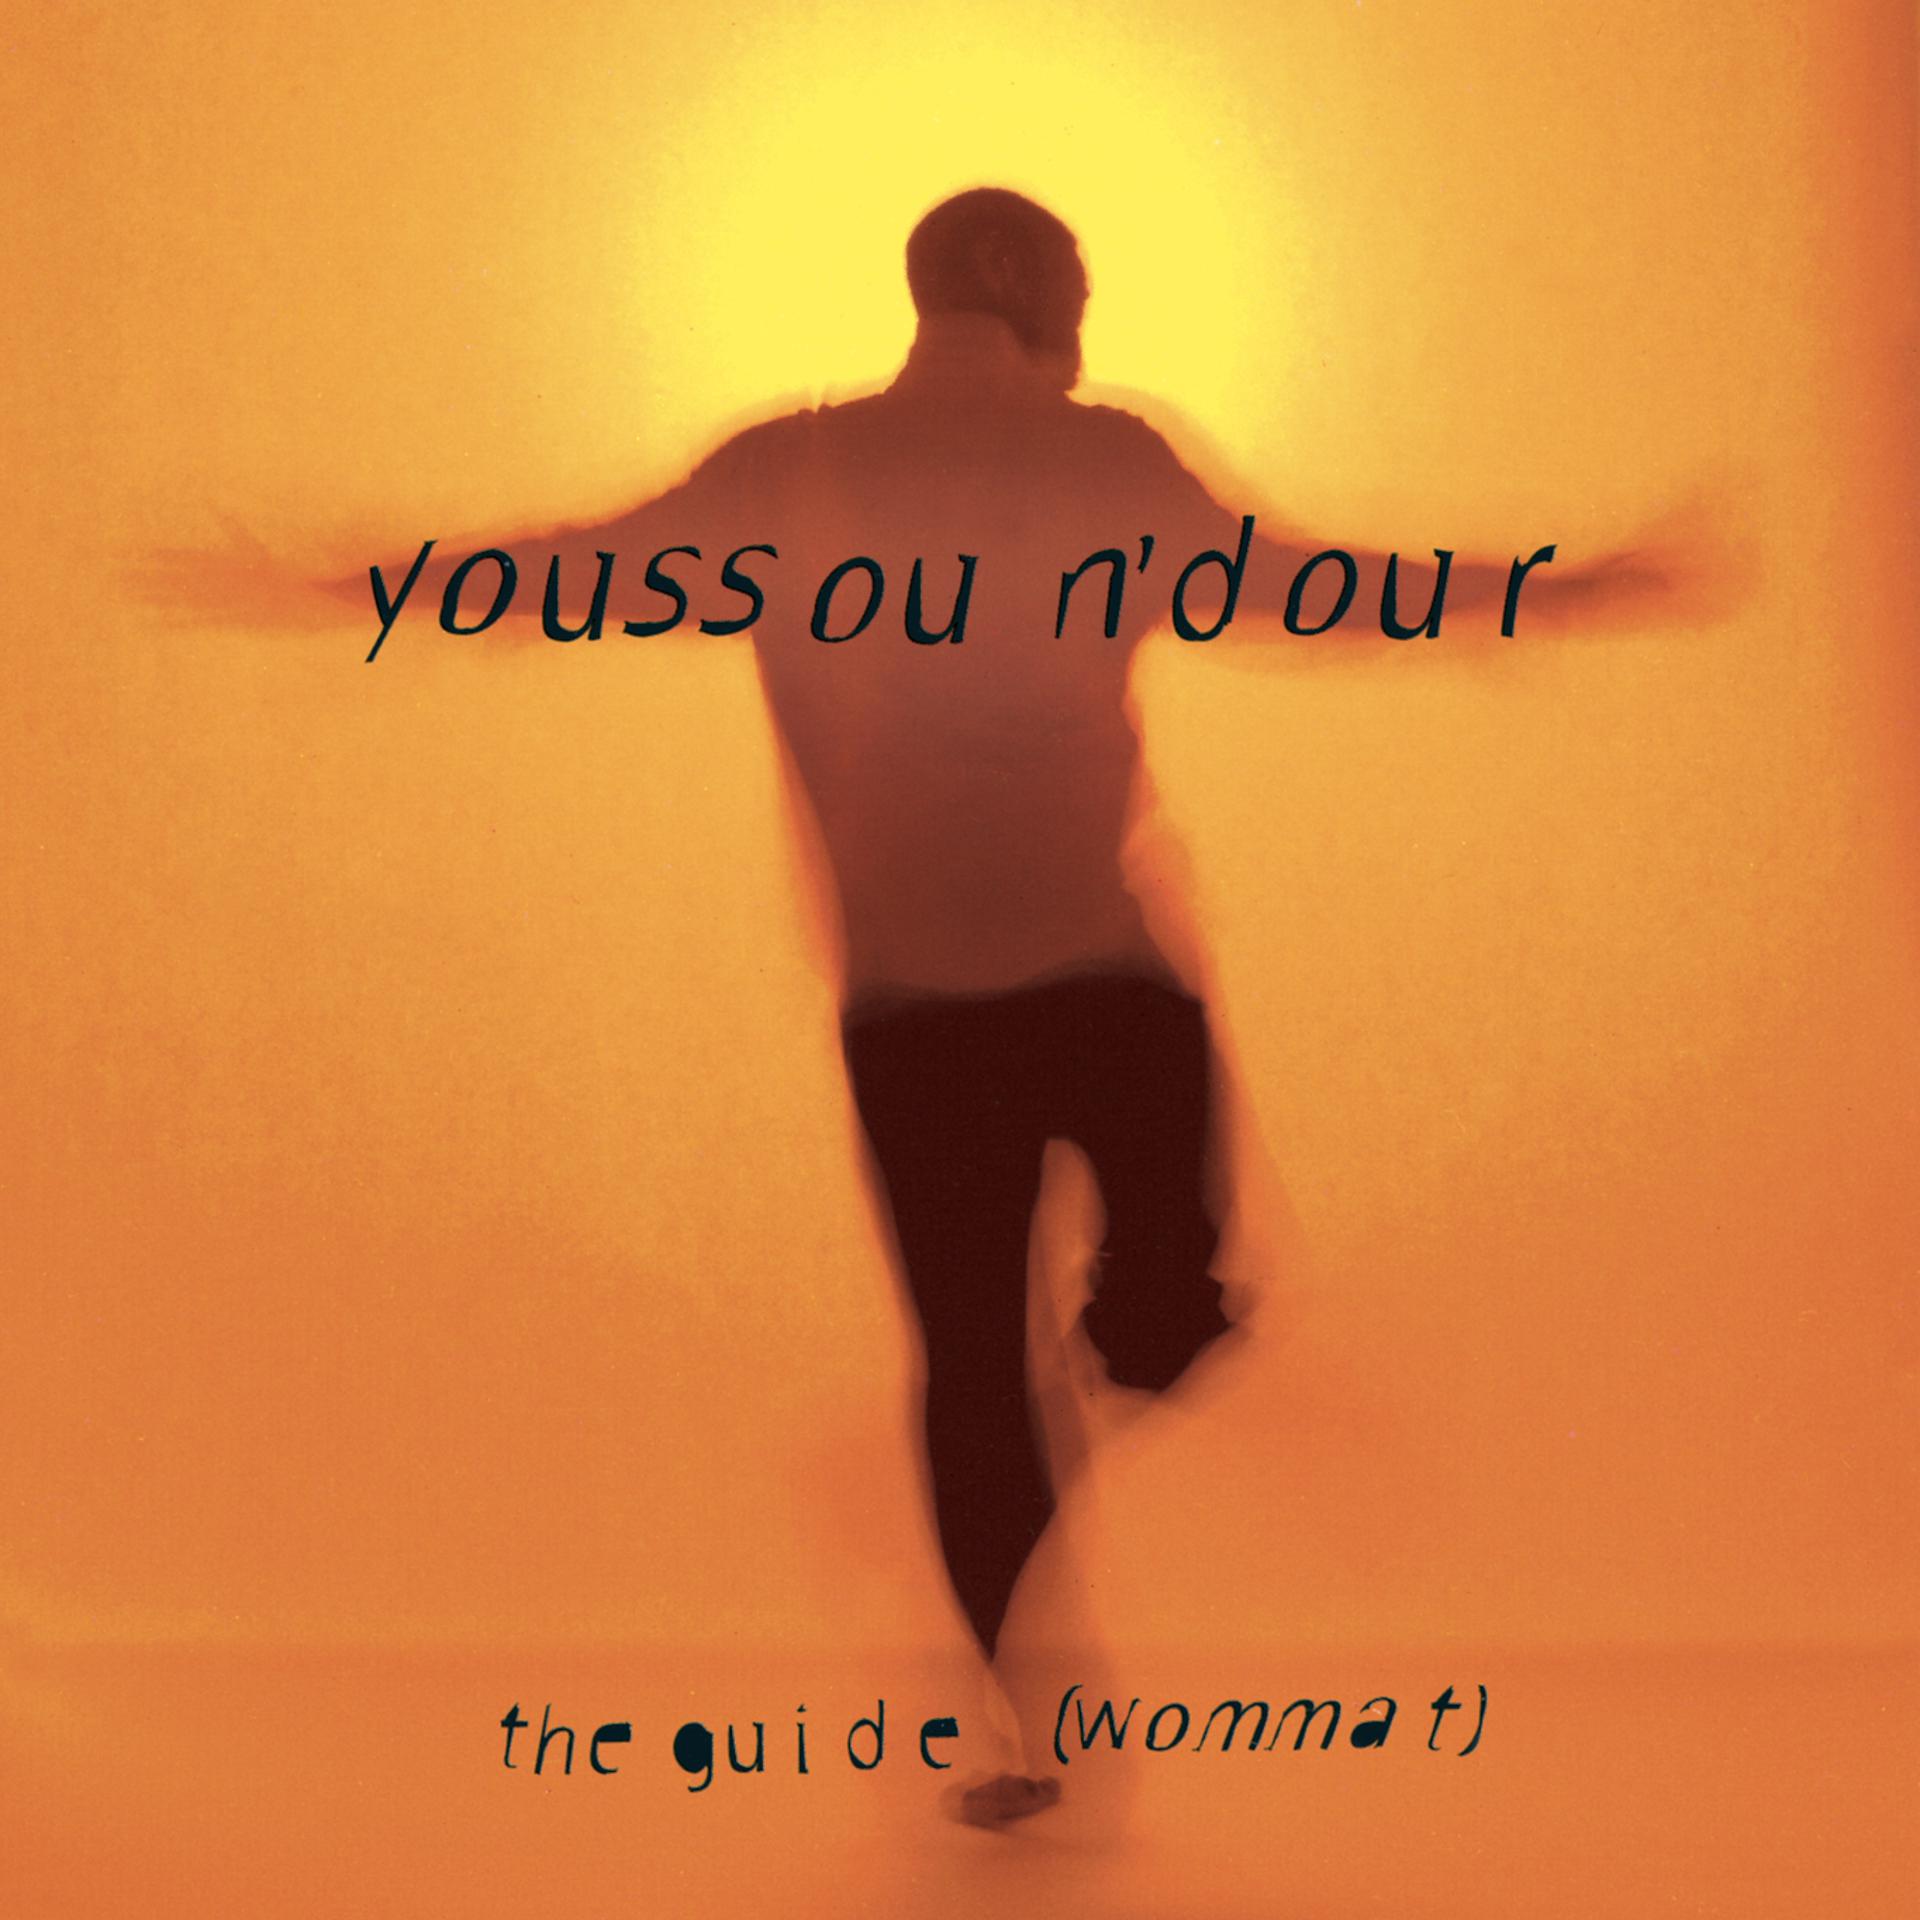 Neneh cherry youssou n dour seconds. Youssou n'Dour the Guide. Youssou n'Dour the Guide Wommat. Youssou n'Dour album the Guide. Youssou n'Dour фото.